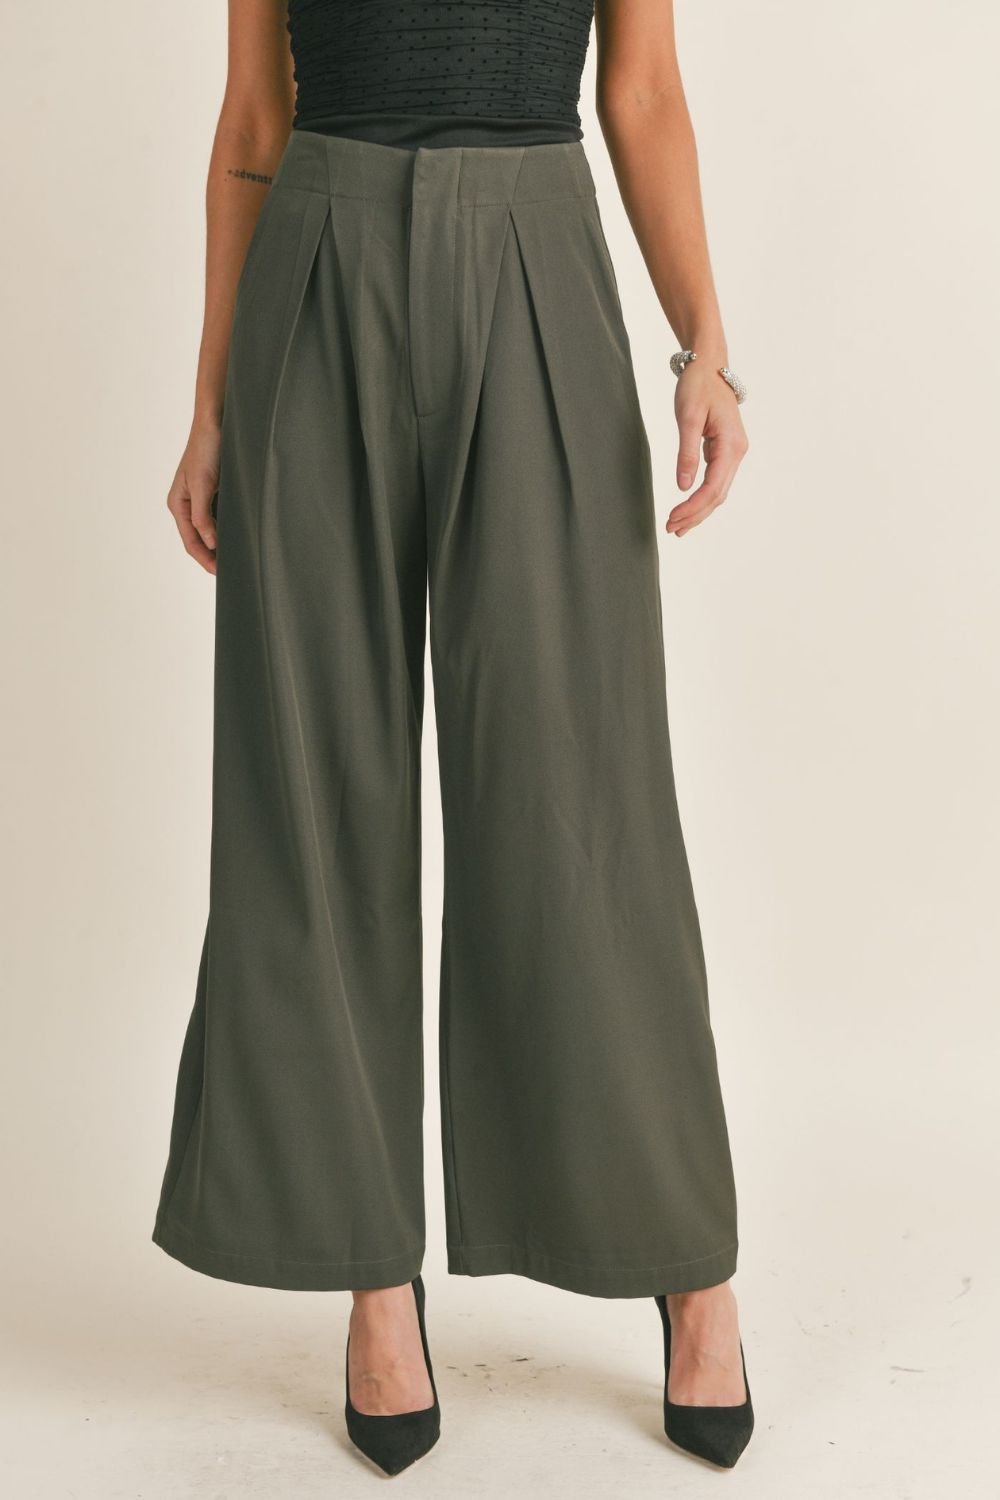 Tietoc Women Casual Solid Pants Comfortable Elastic High India | Ubuy